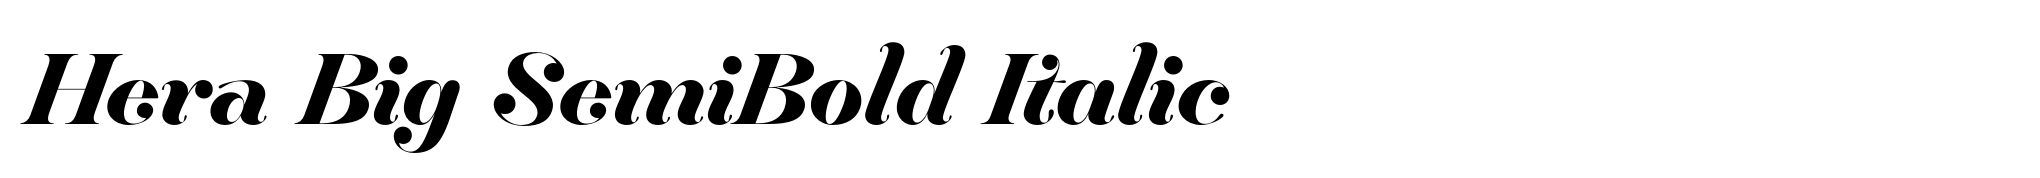 Hera Big SemiBold Italic image